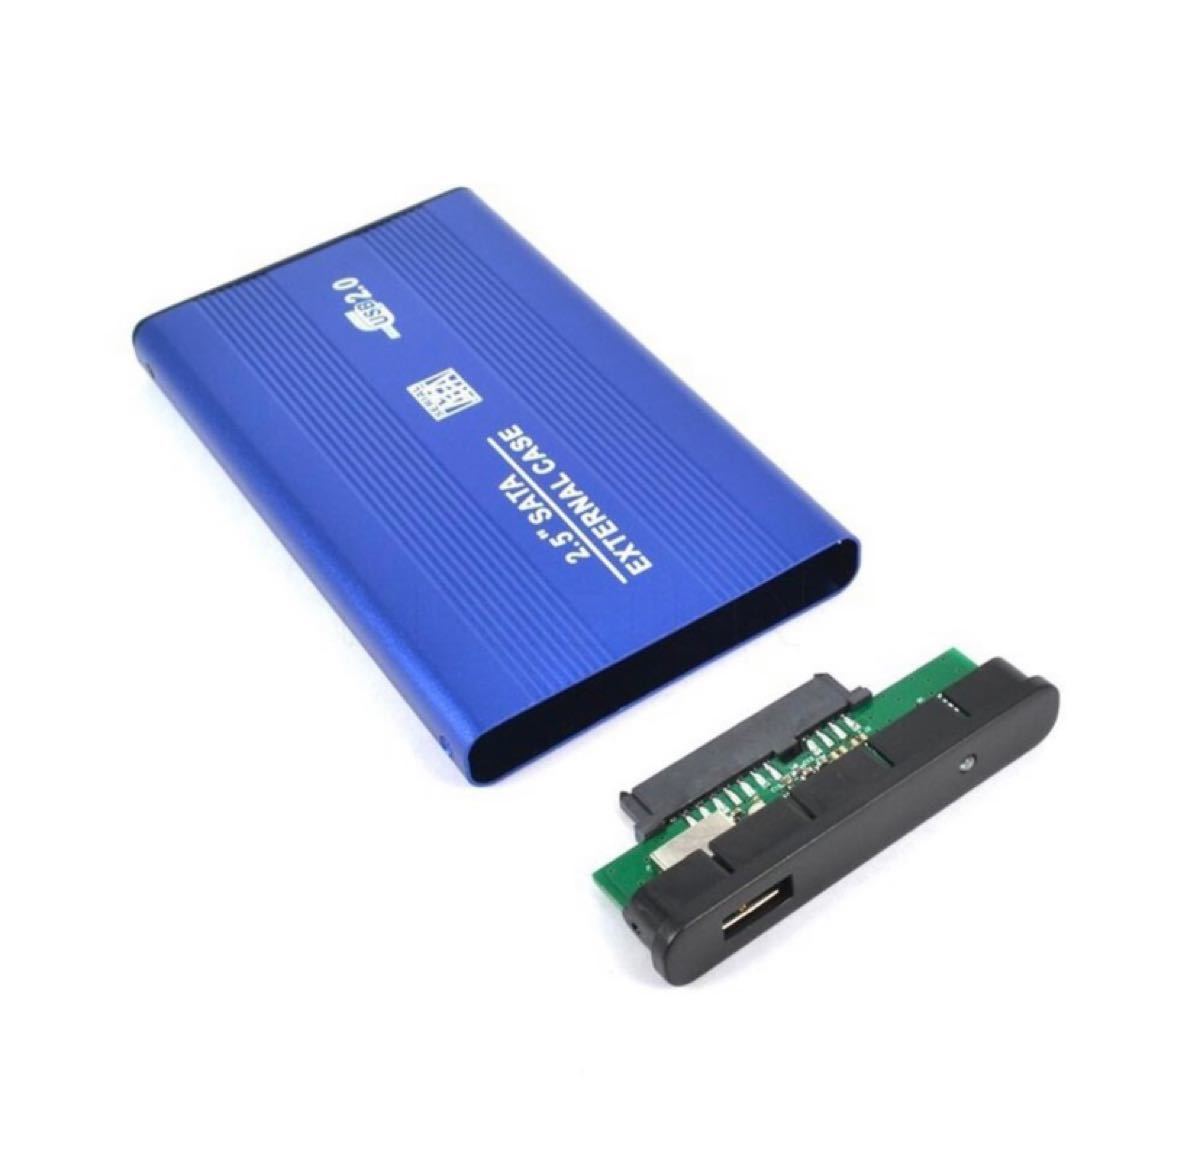 【USB2.0対応/シルバー】2.5インチ HDD SSD 外付け USB接続